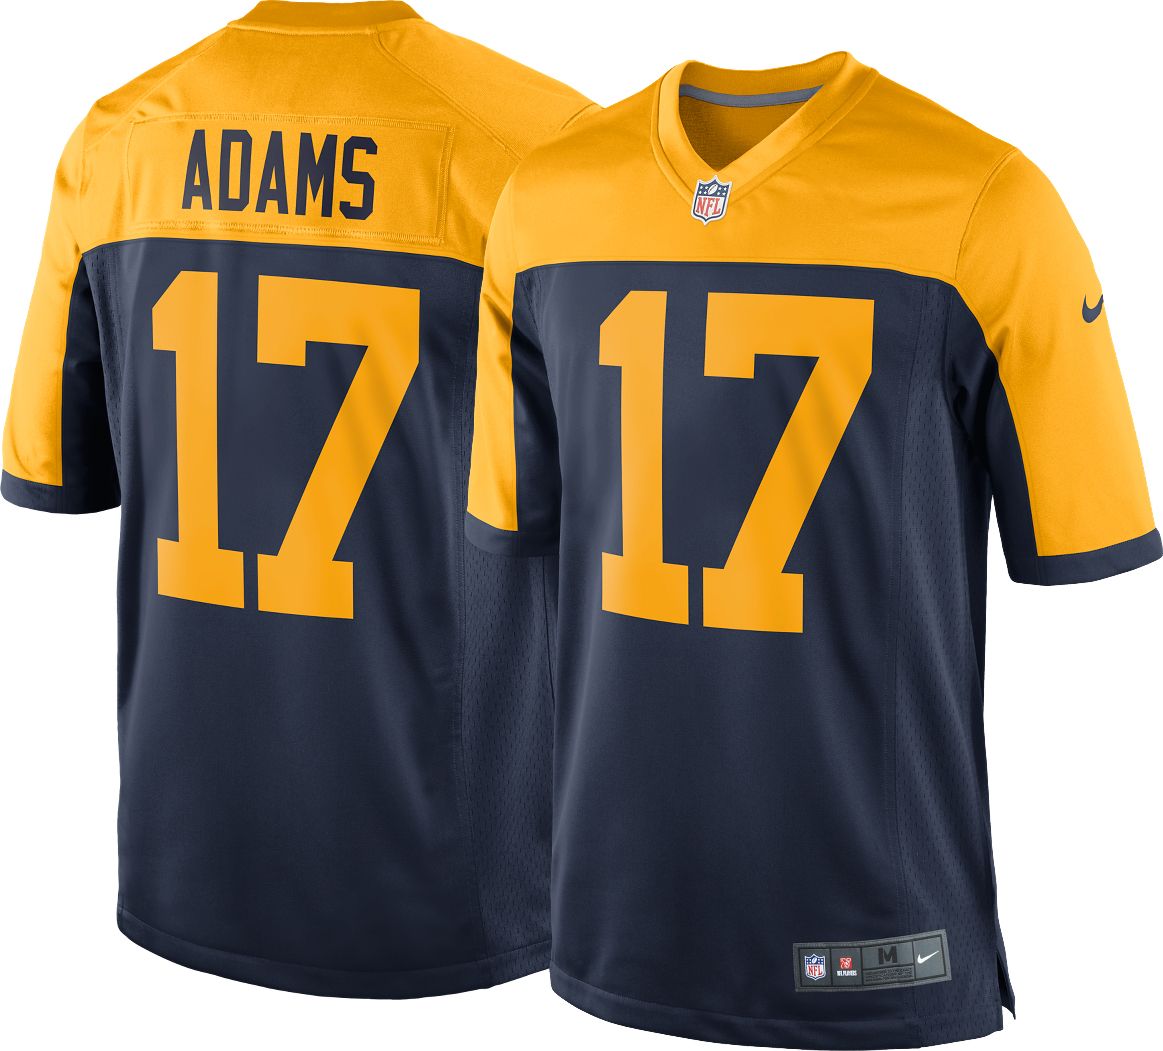 adams packers jersey